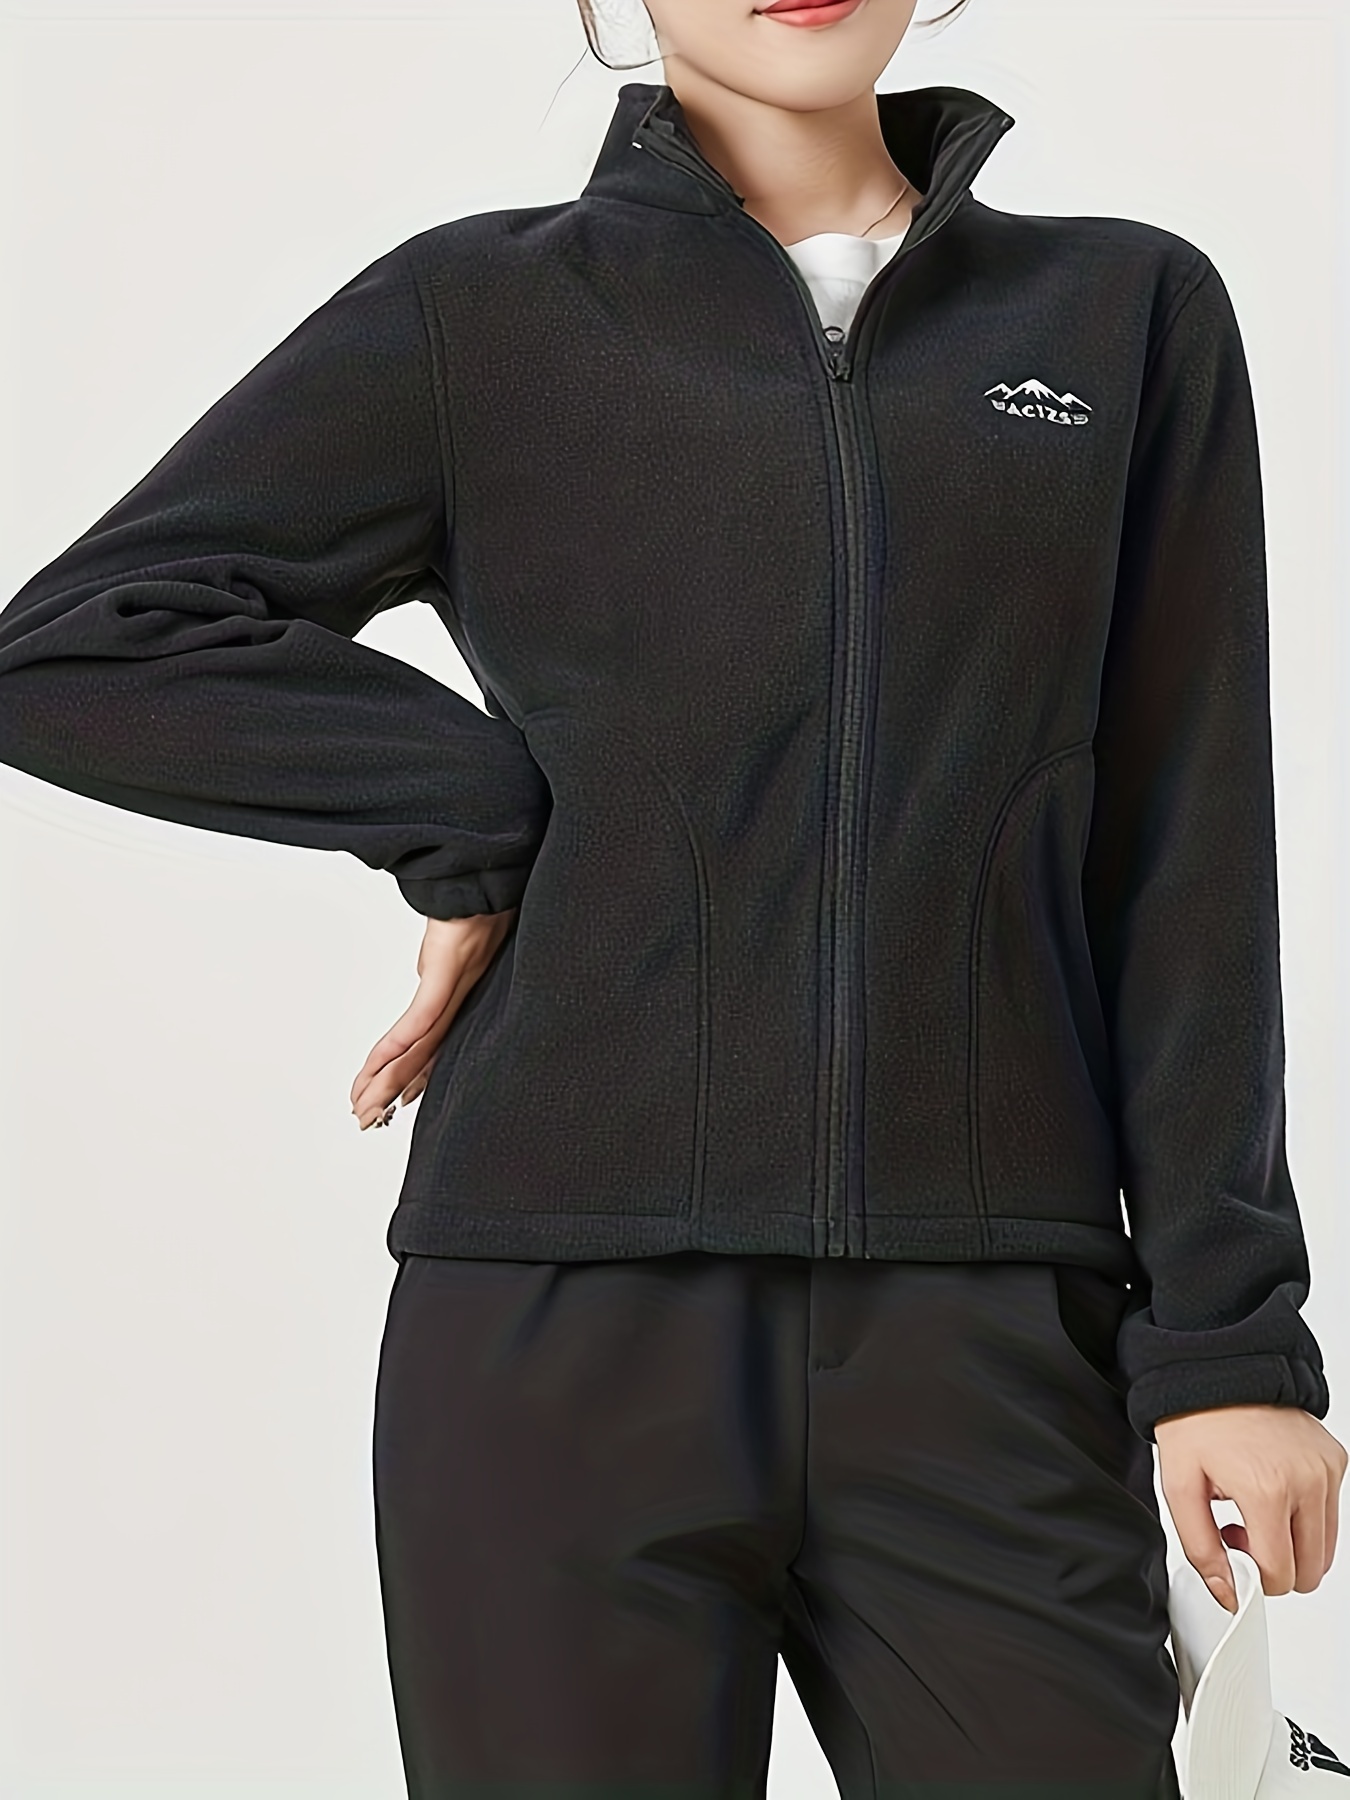 Womens Solid Fleece Jacket Full Zip Warm Soft Polar Long Sleeve